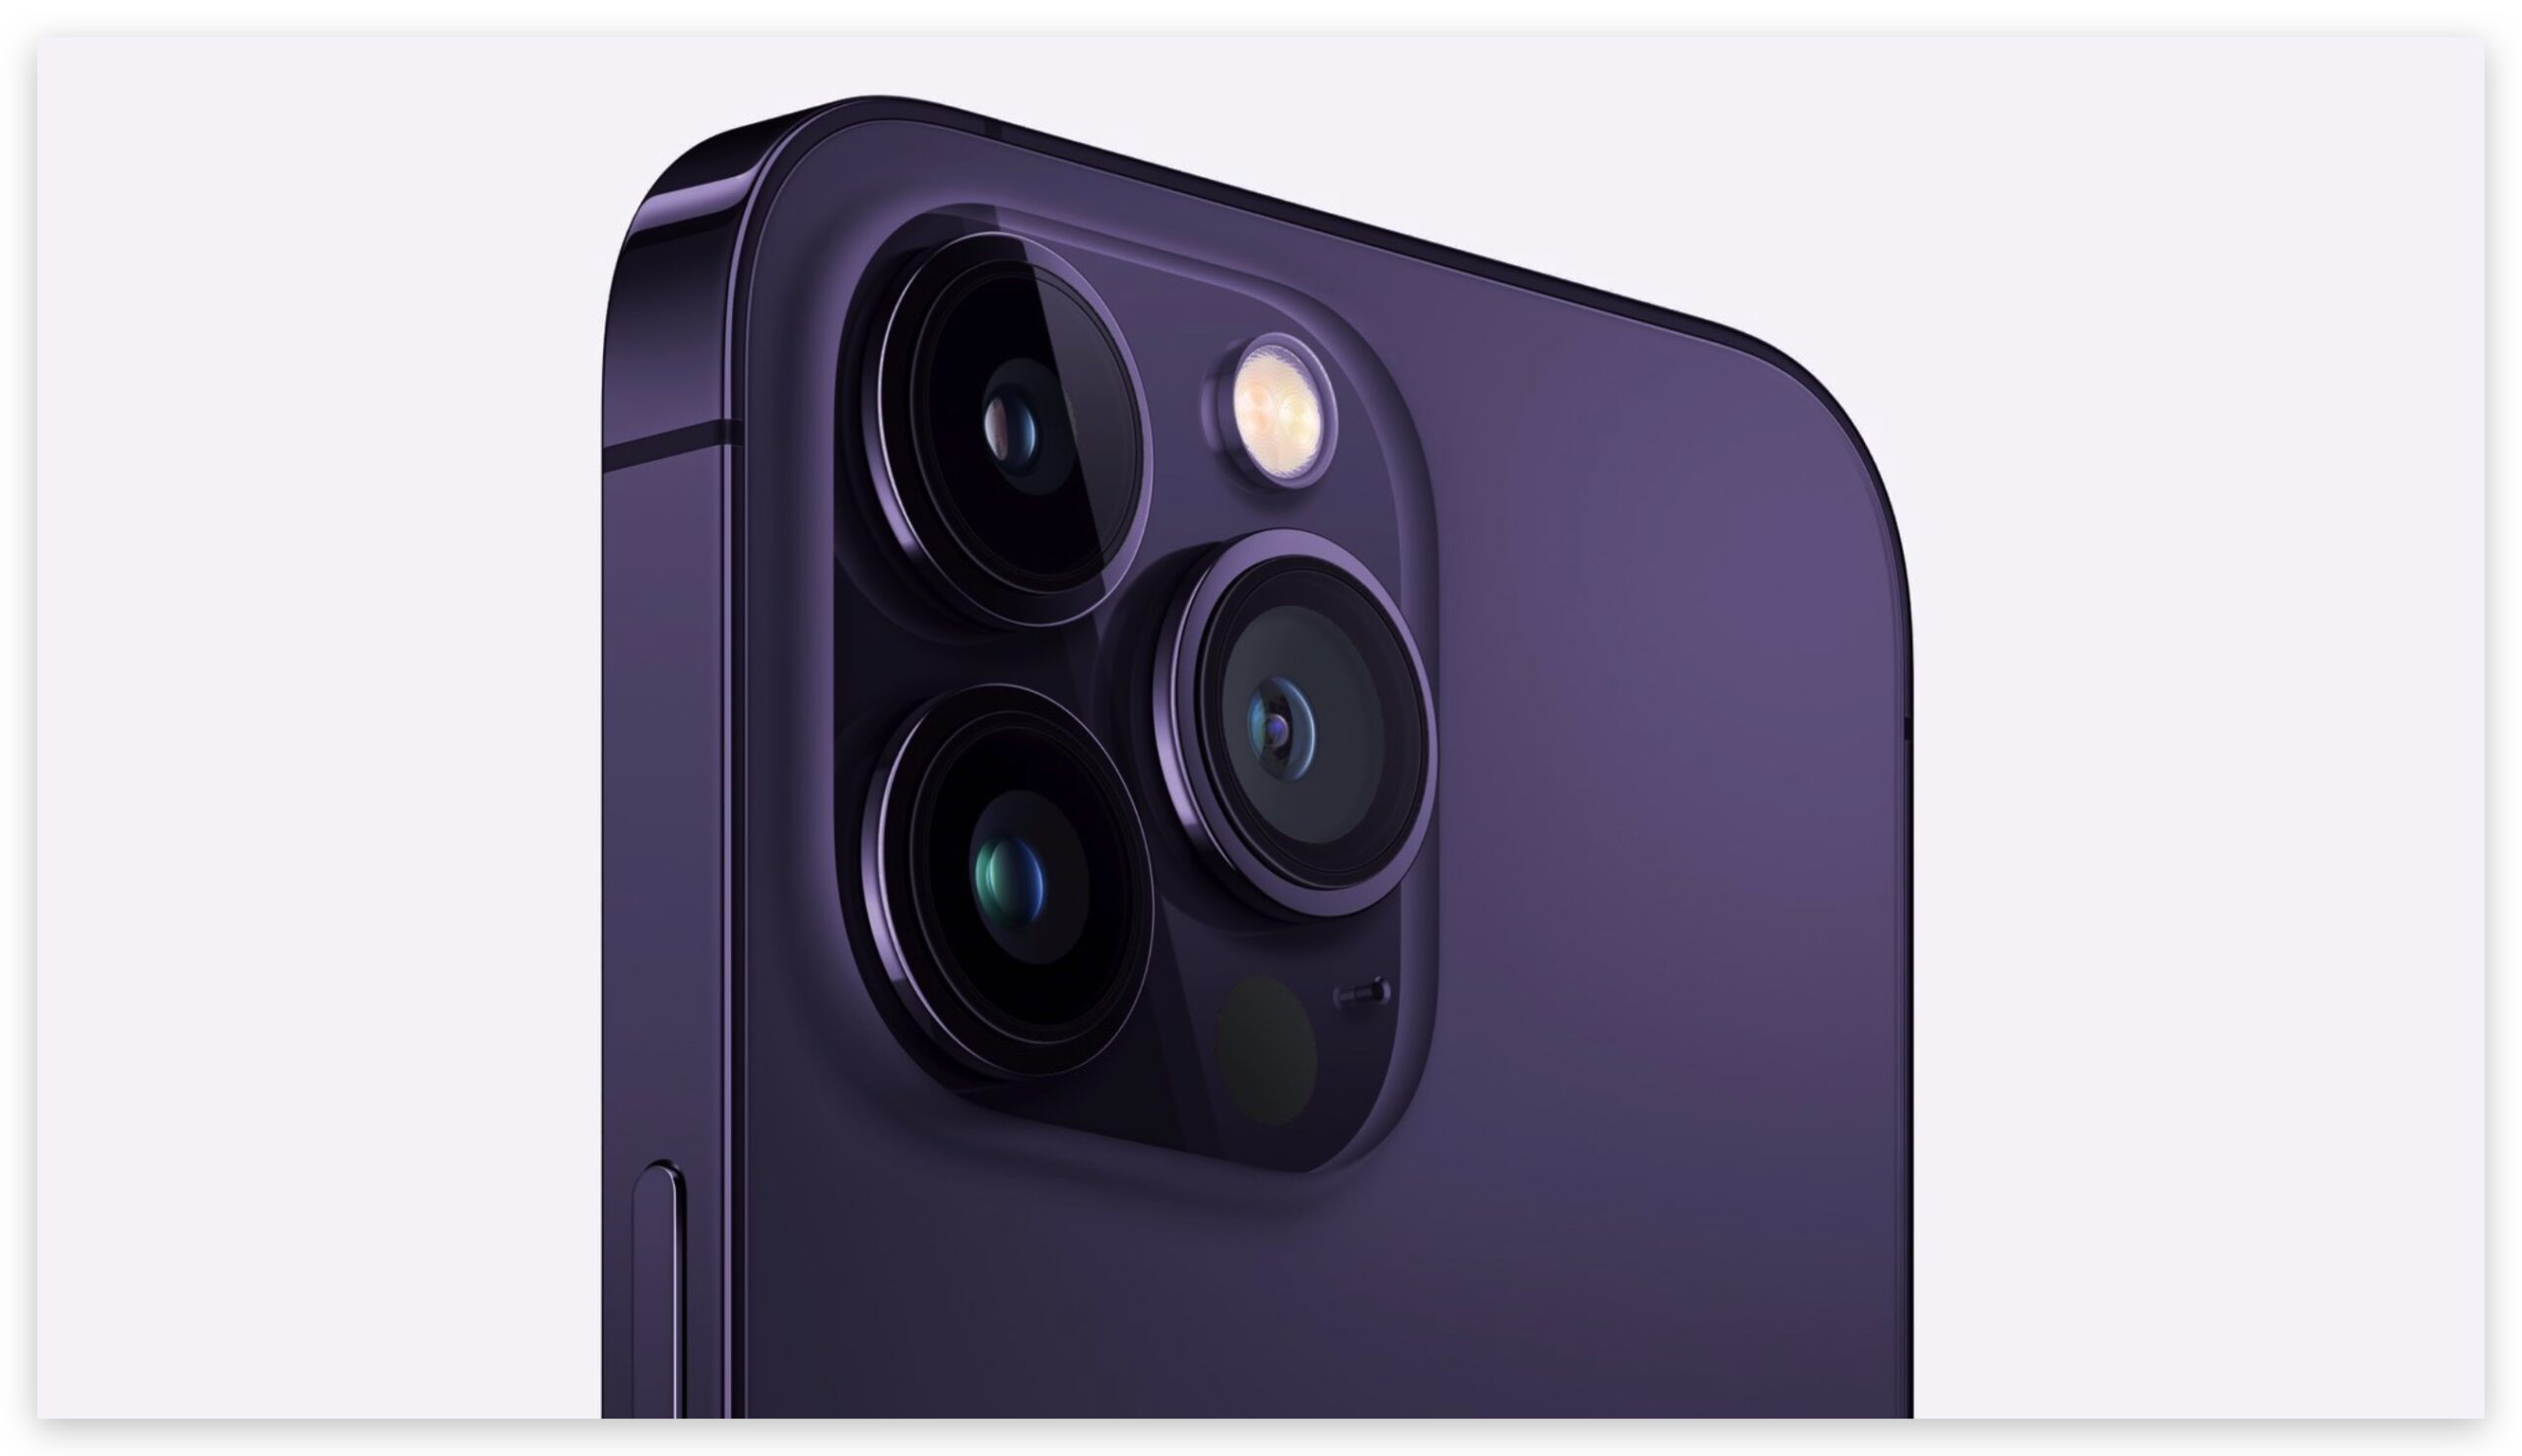 iPhone 14 紫色 顏色